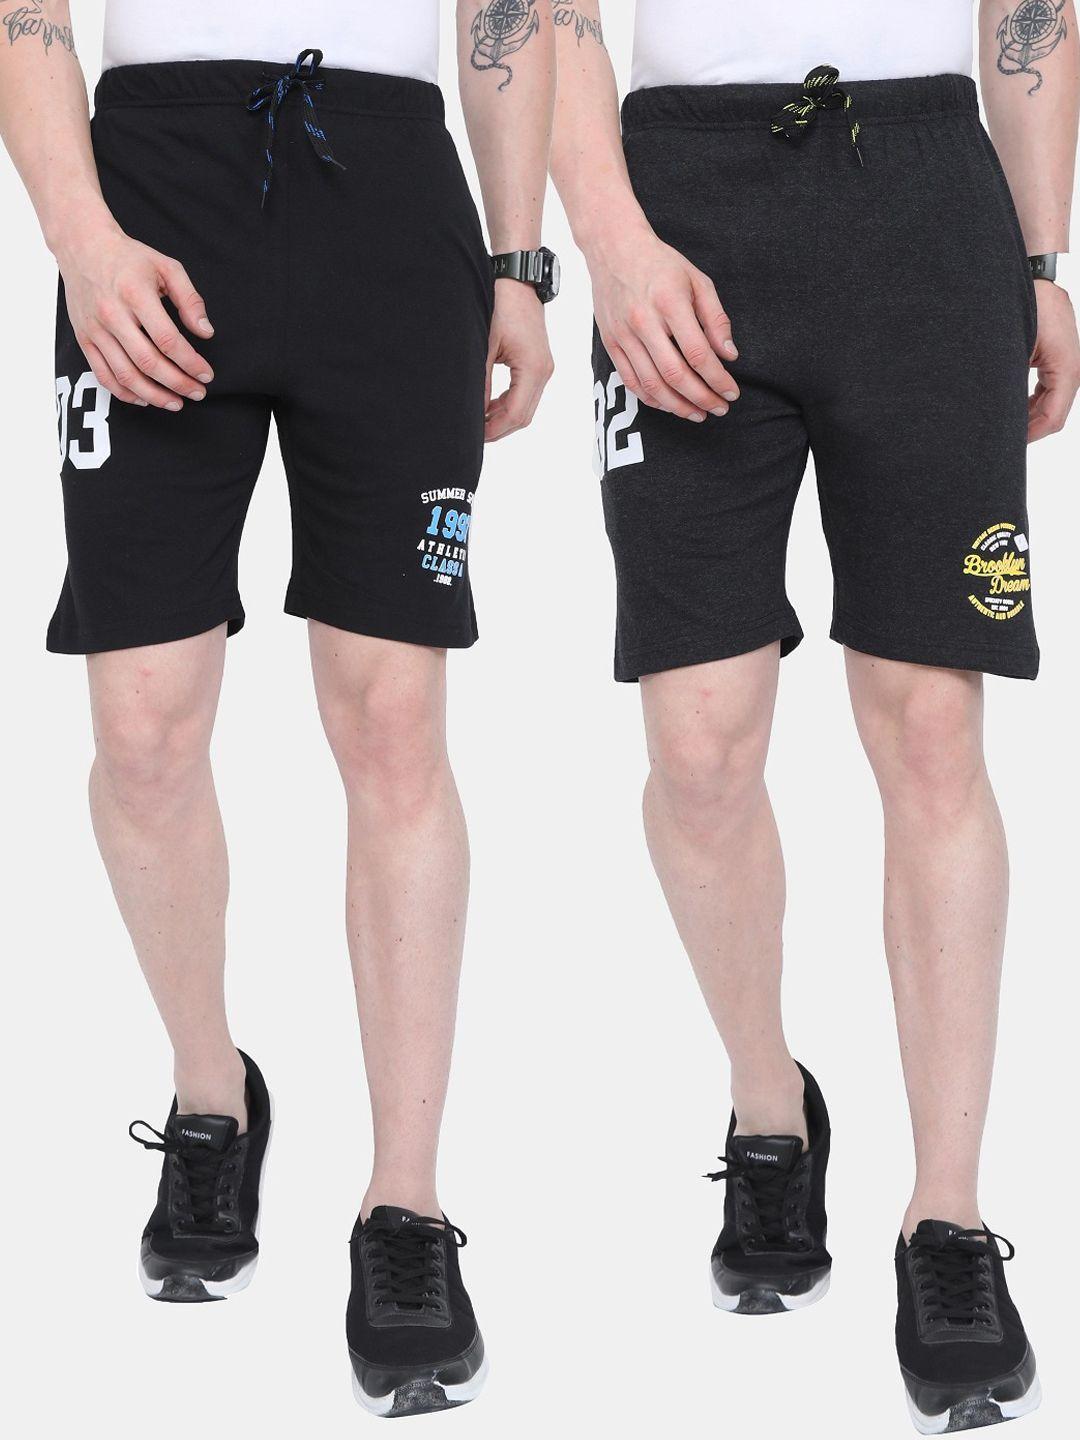 ardeur men multicoloured printed training or gym regular shorts